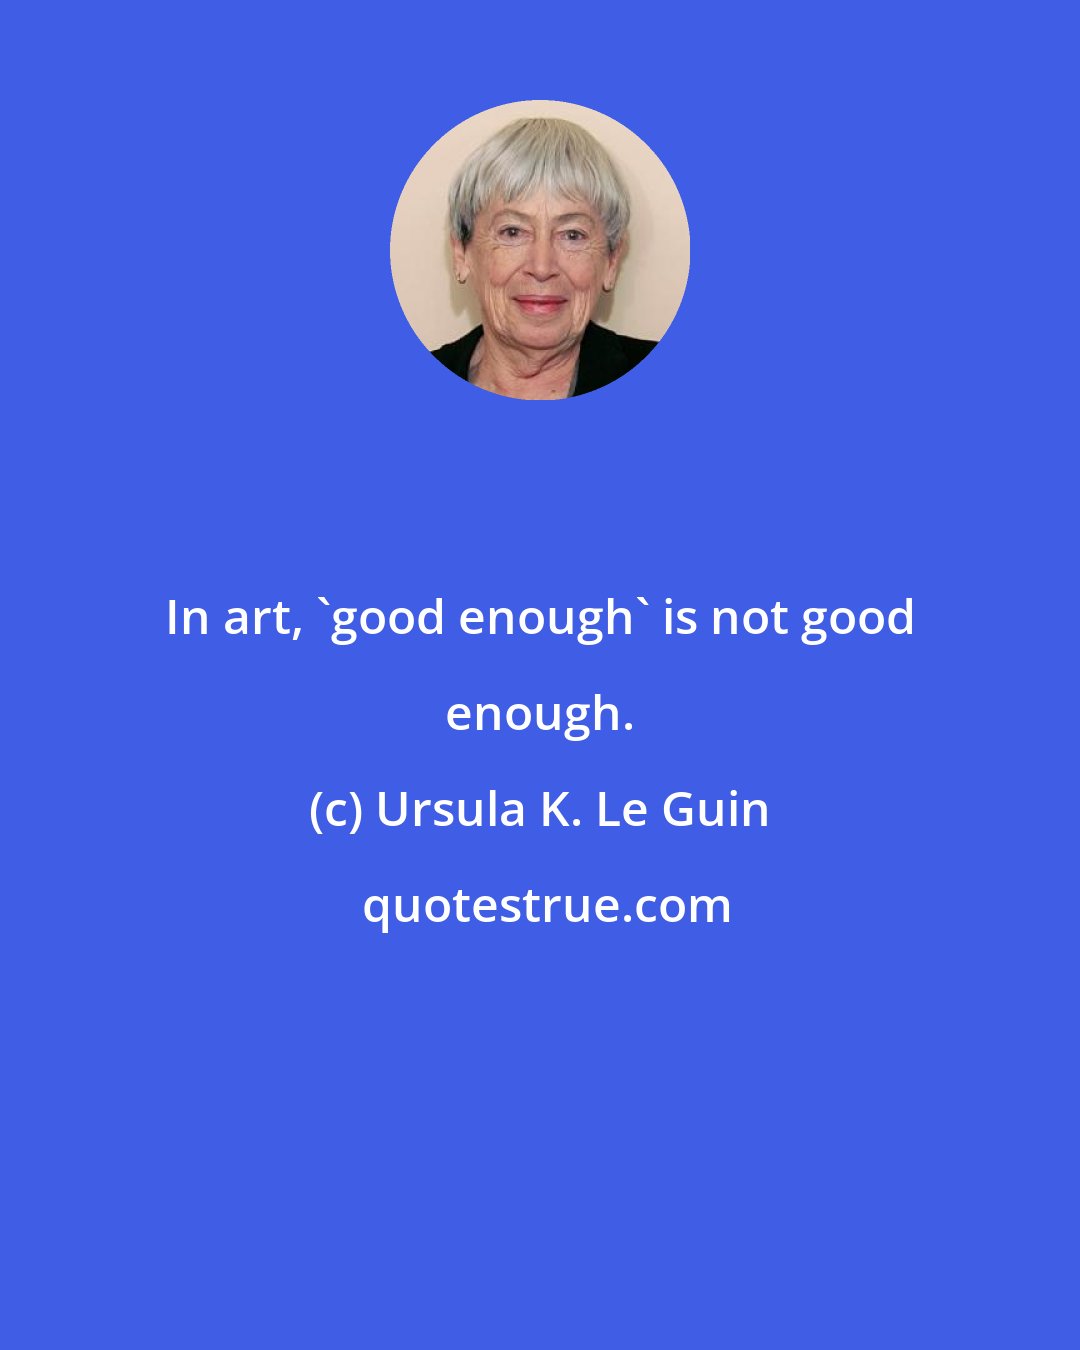 Ursula K. Le Guin: In art, 'good enough' is not good enough.